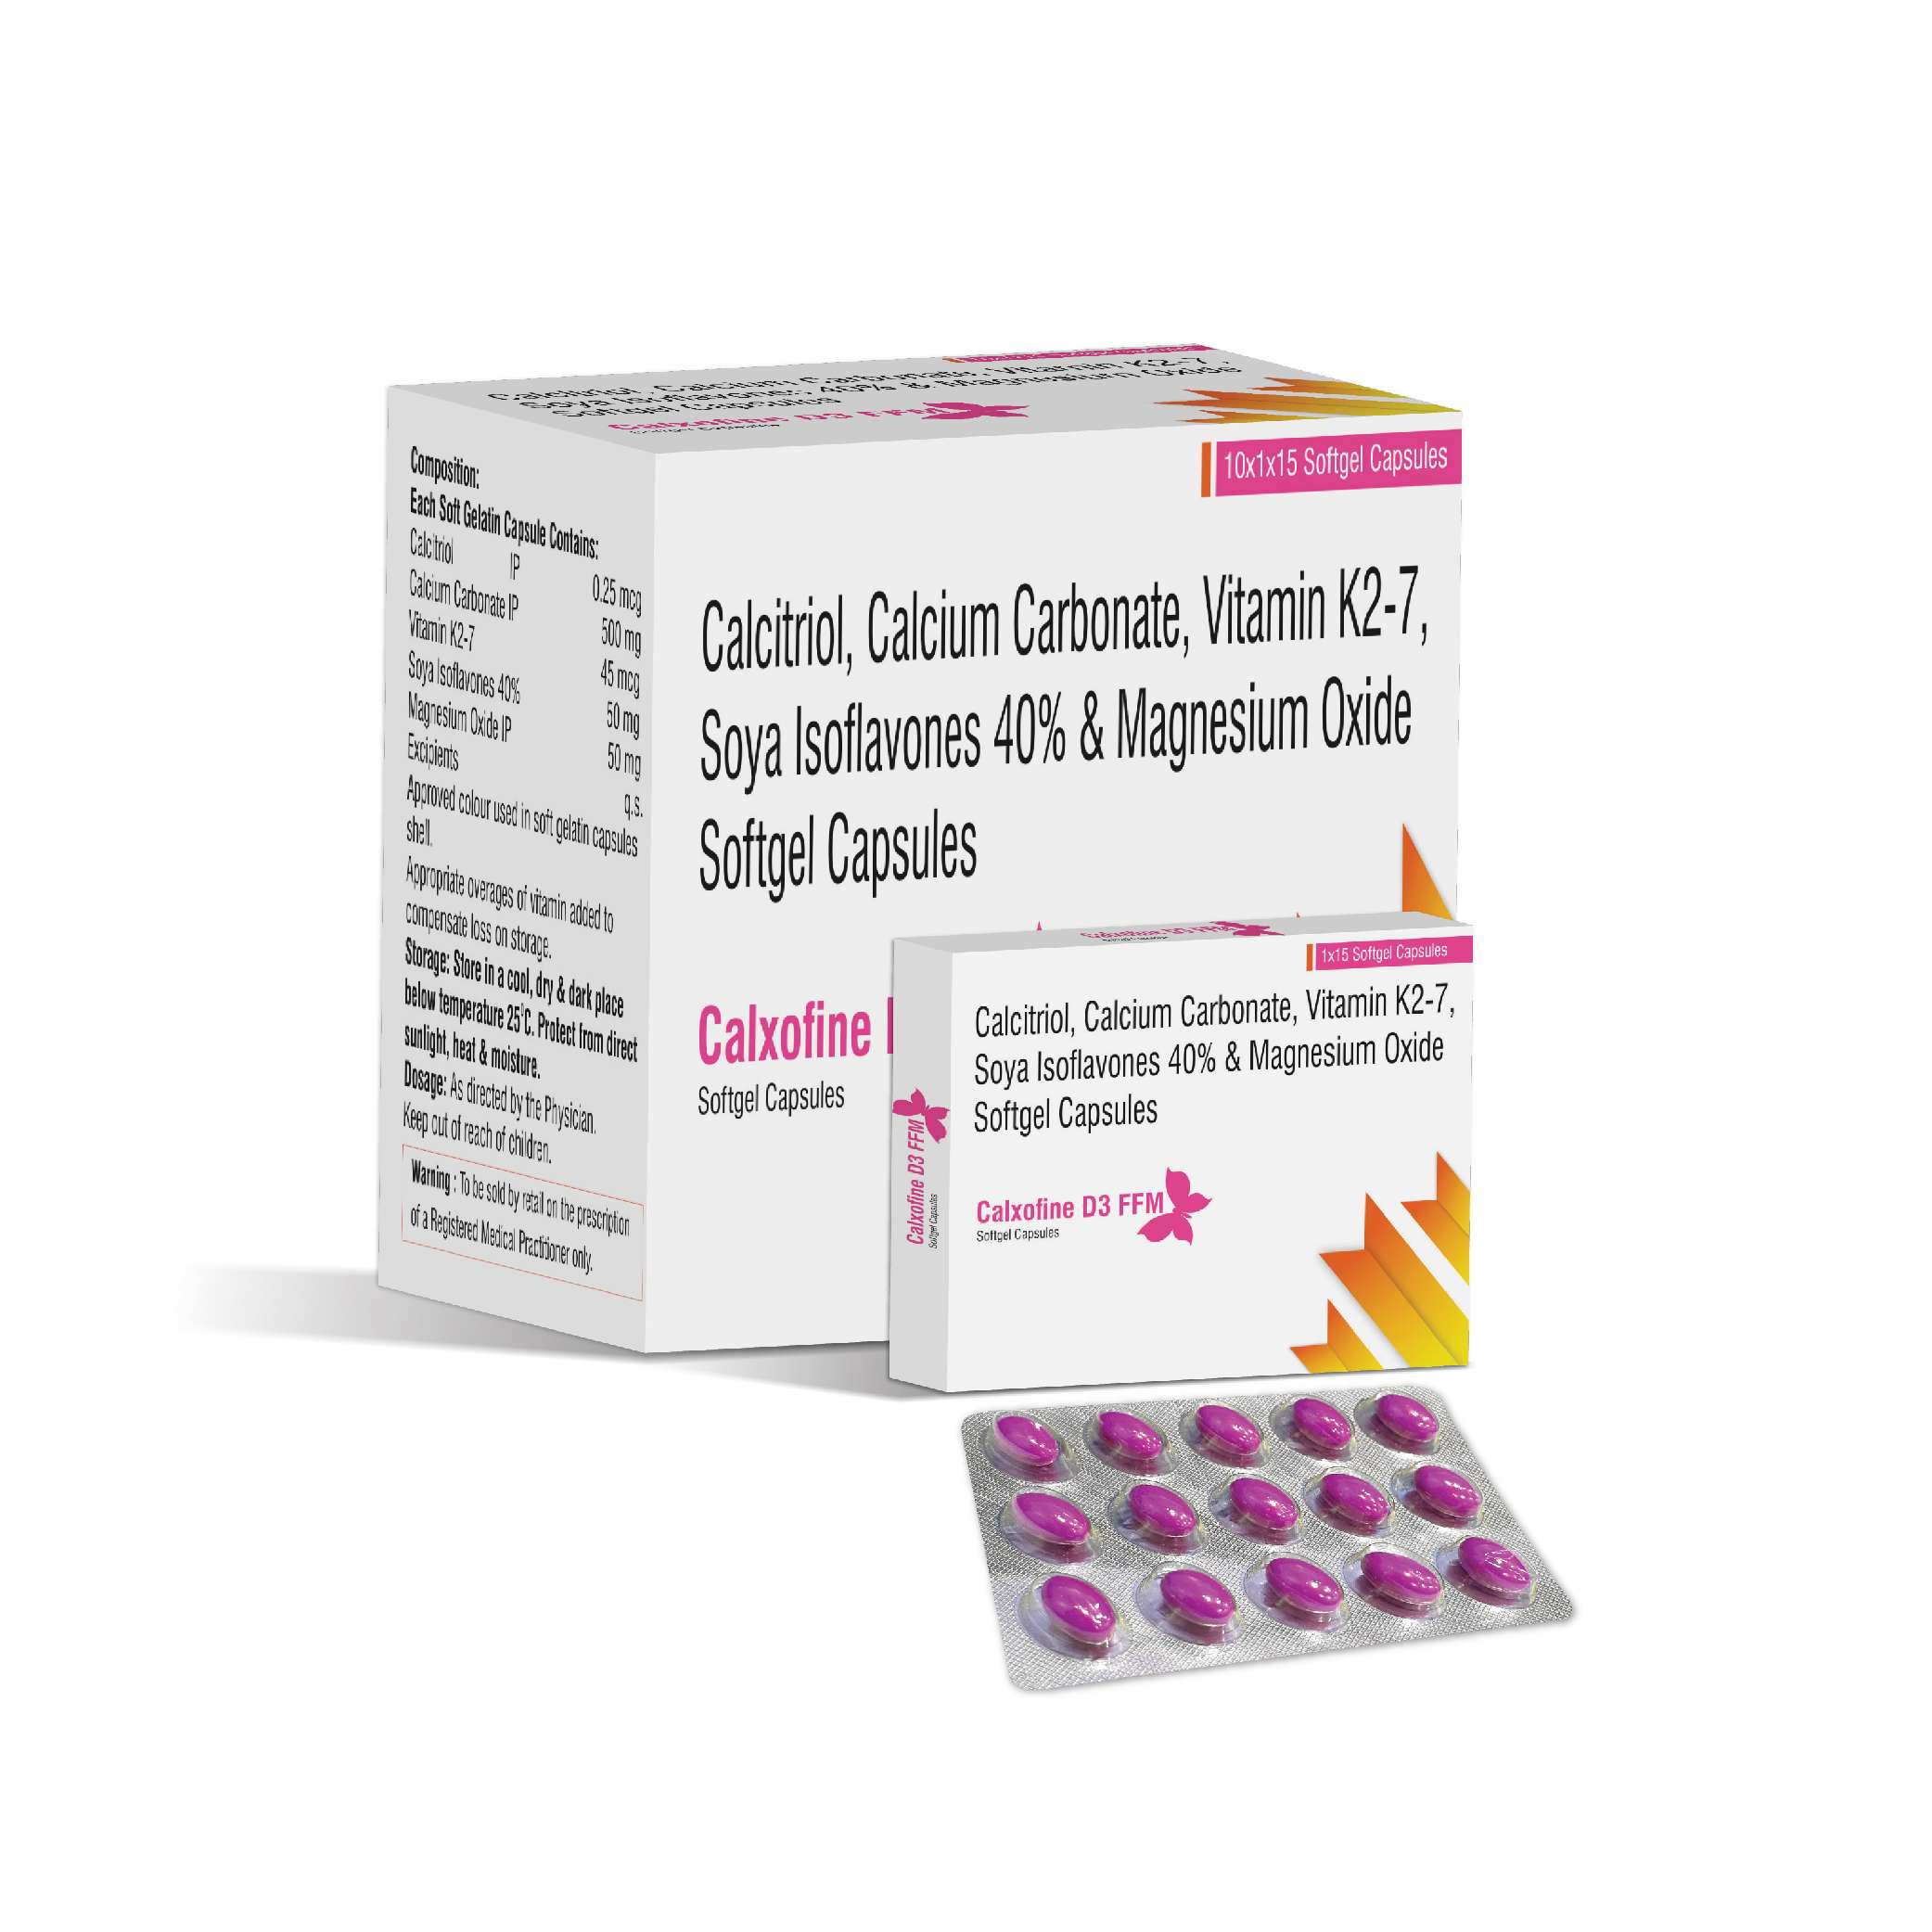 calcitriol 0.25 mcg + calcium carbonate 500 mg + vitamin k27 45 mcg + soya isoflavones 40% - 50 mg + magnesium oxide 50 mg